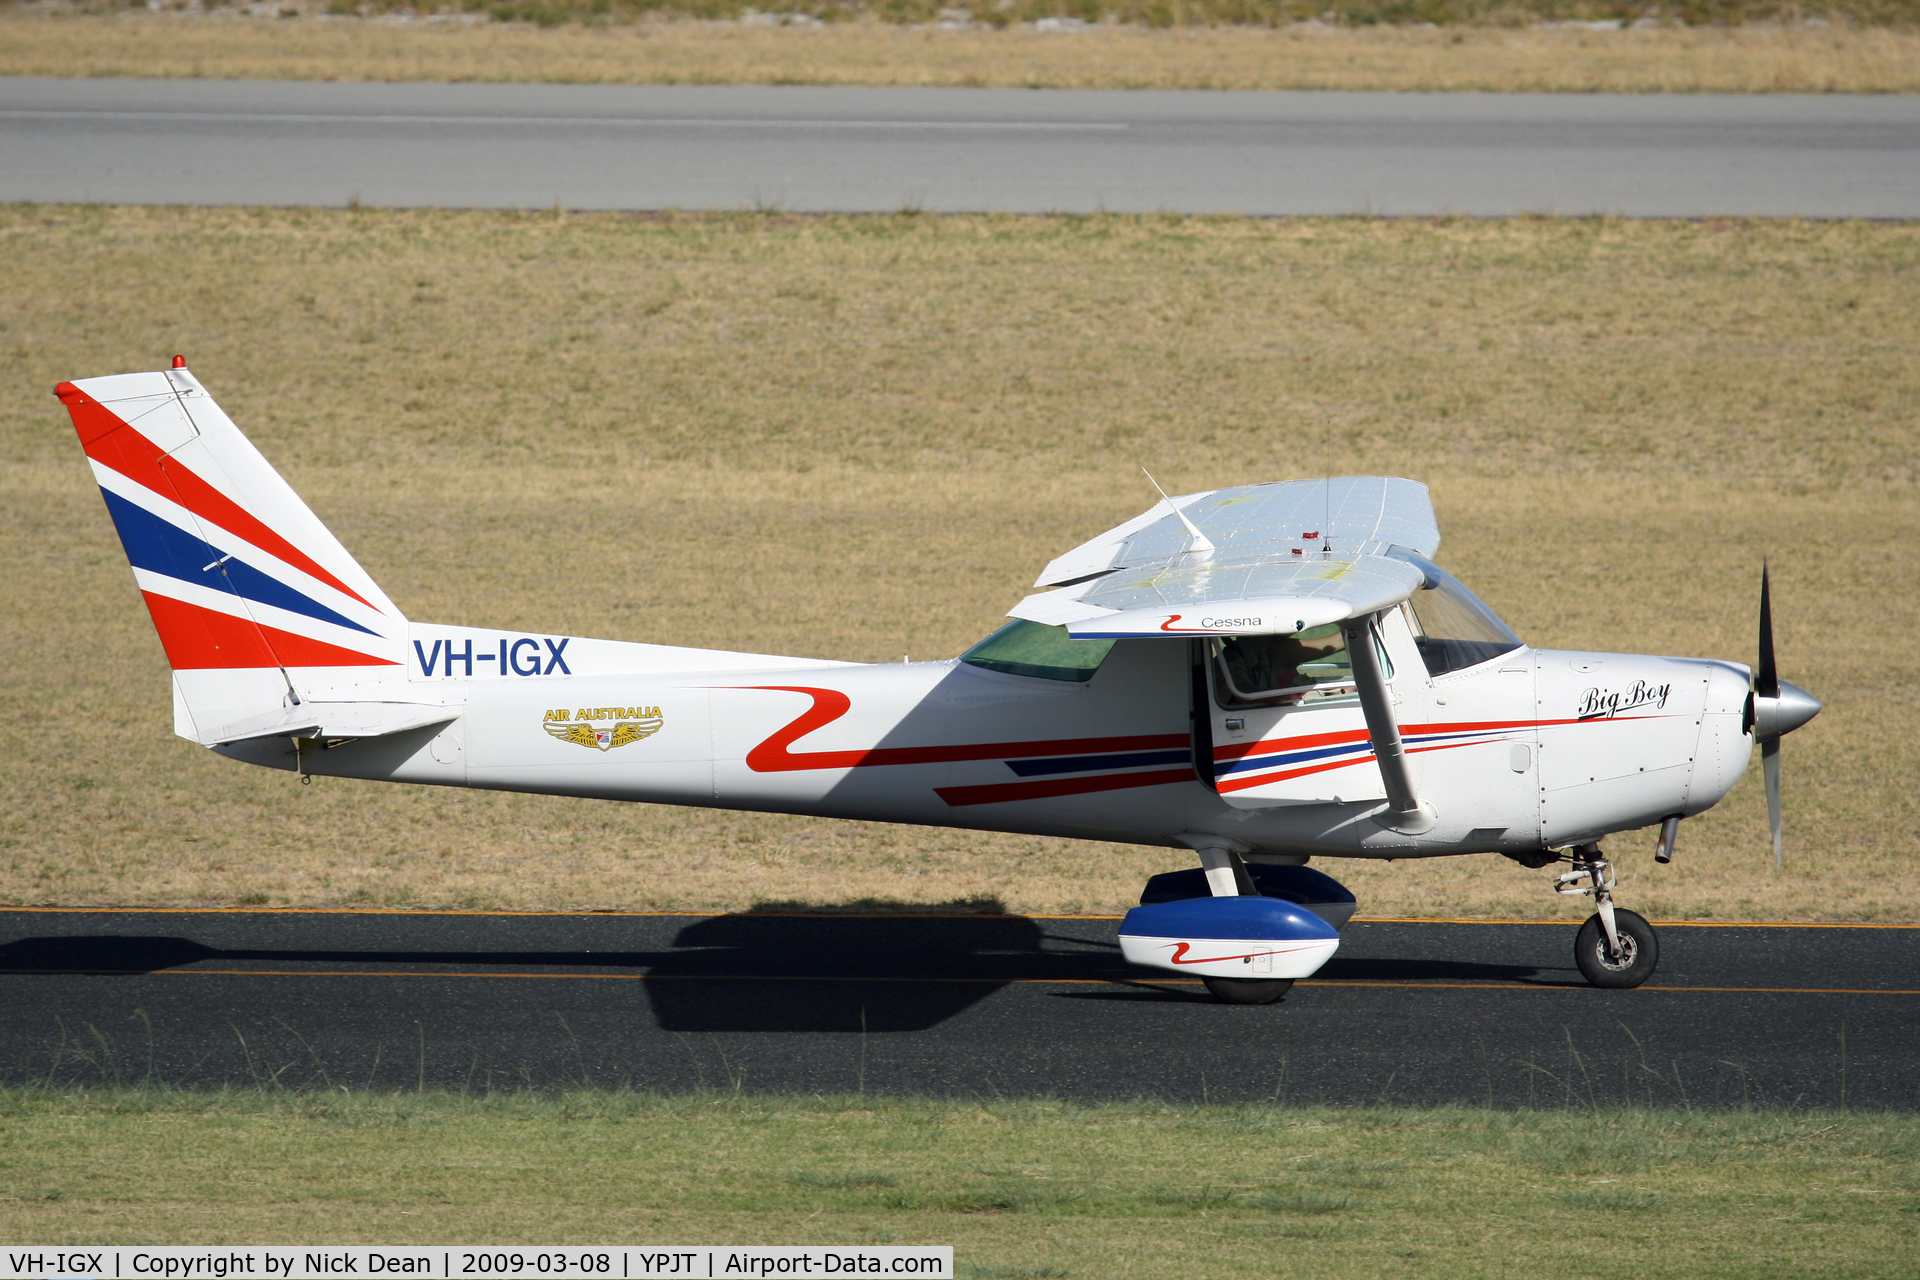 VH-IGX, 1979 Cessna 152 C/N 15283287, YPJT